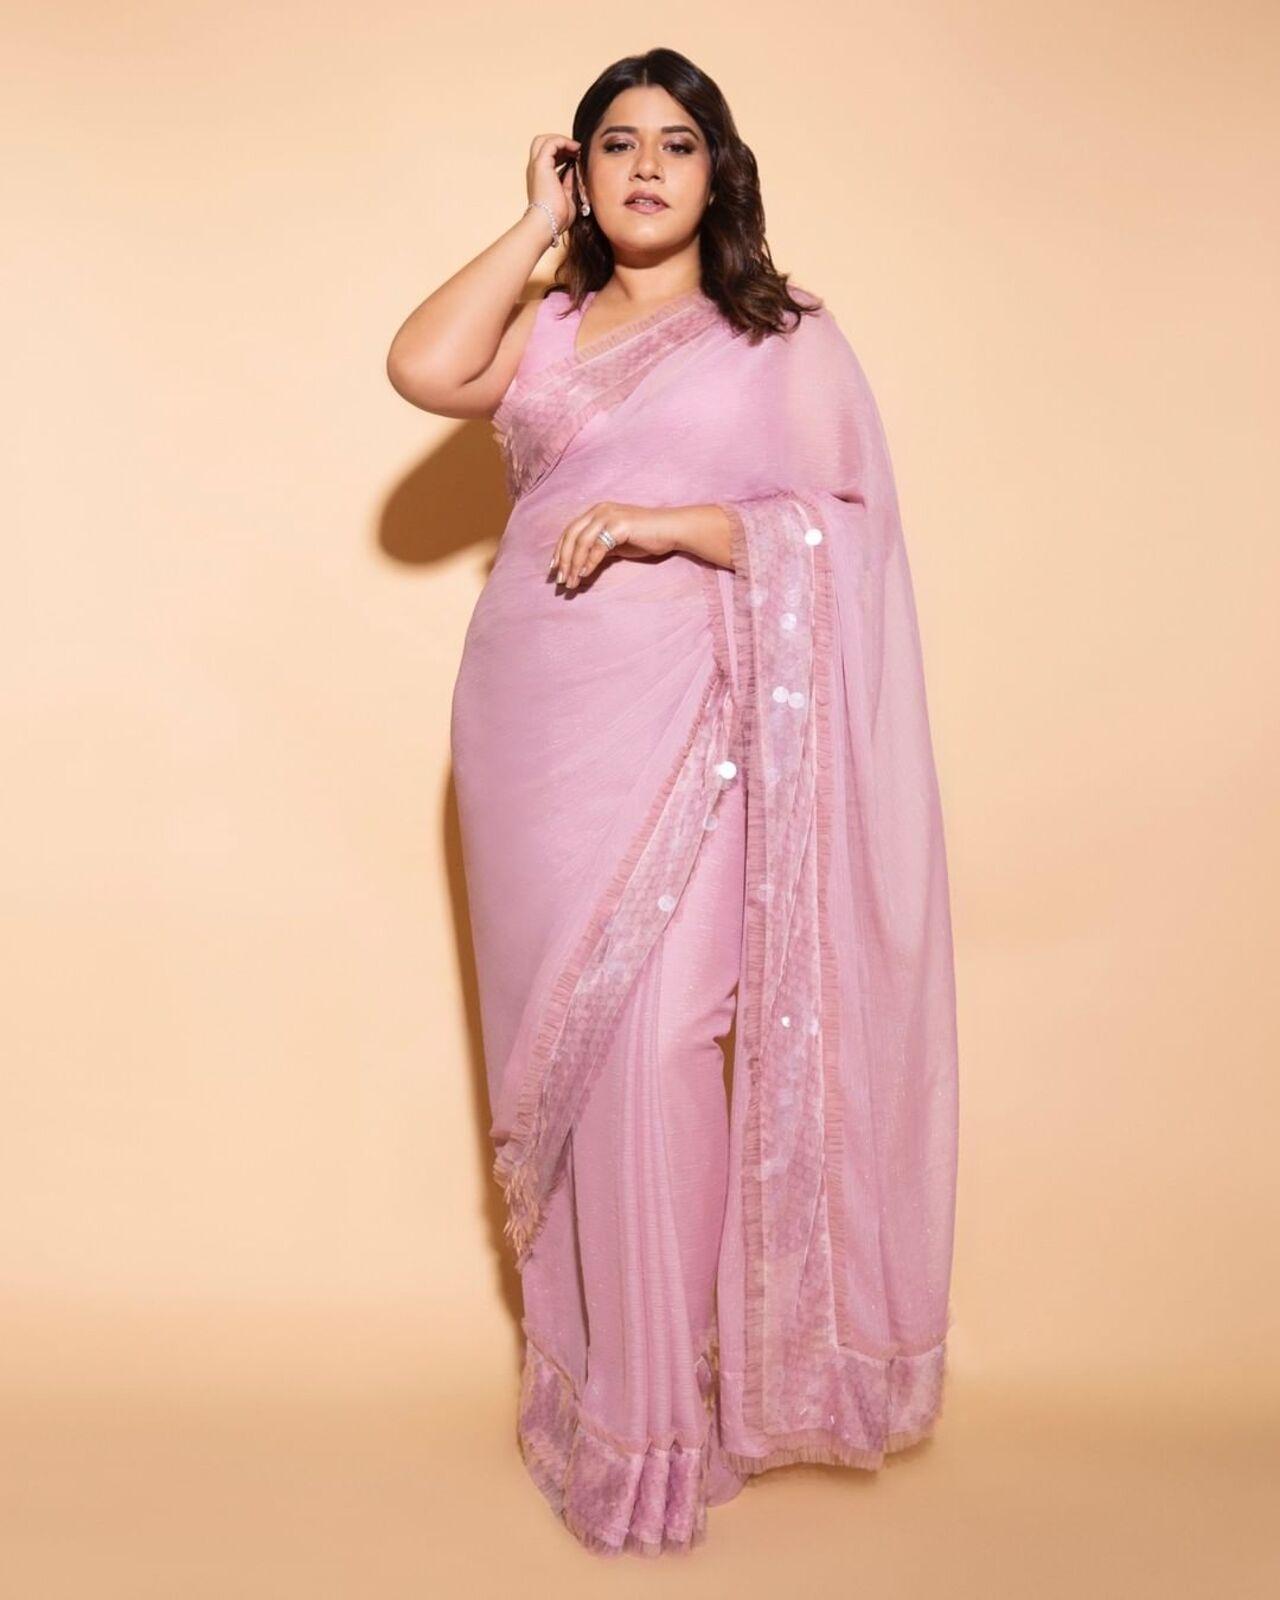 Shikha Talsania rocks this simple yet elegant and classy baby pink saree by Neeta Lulla